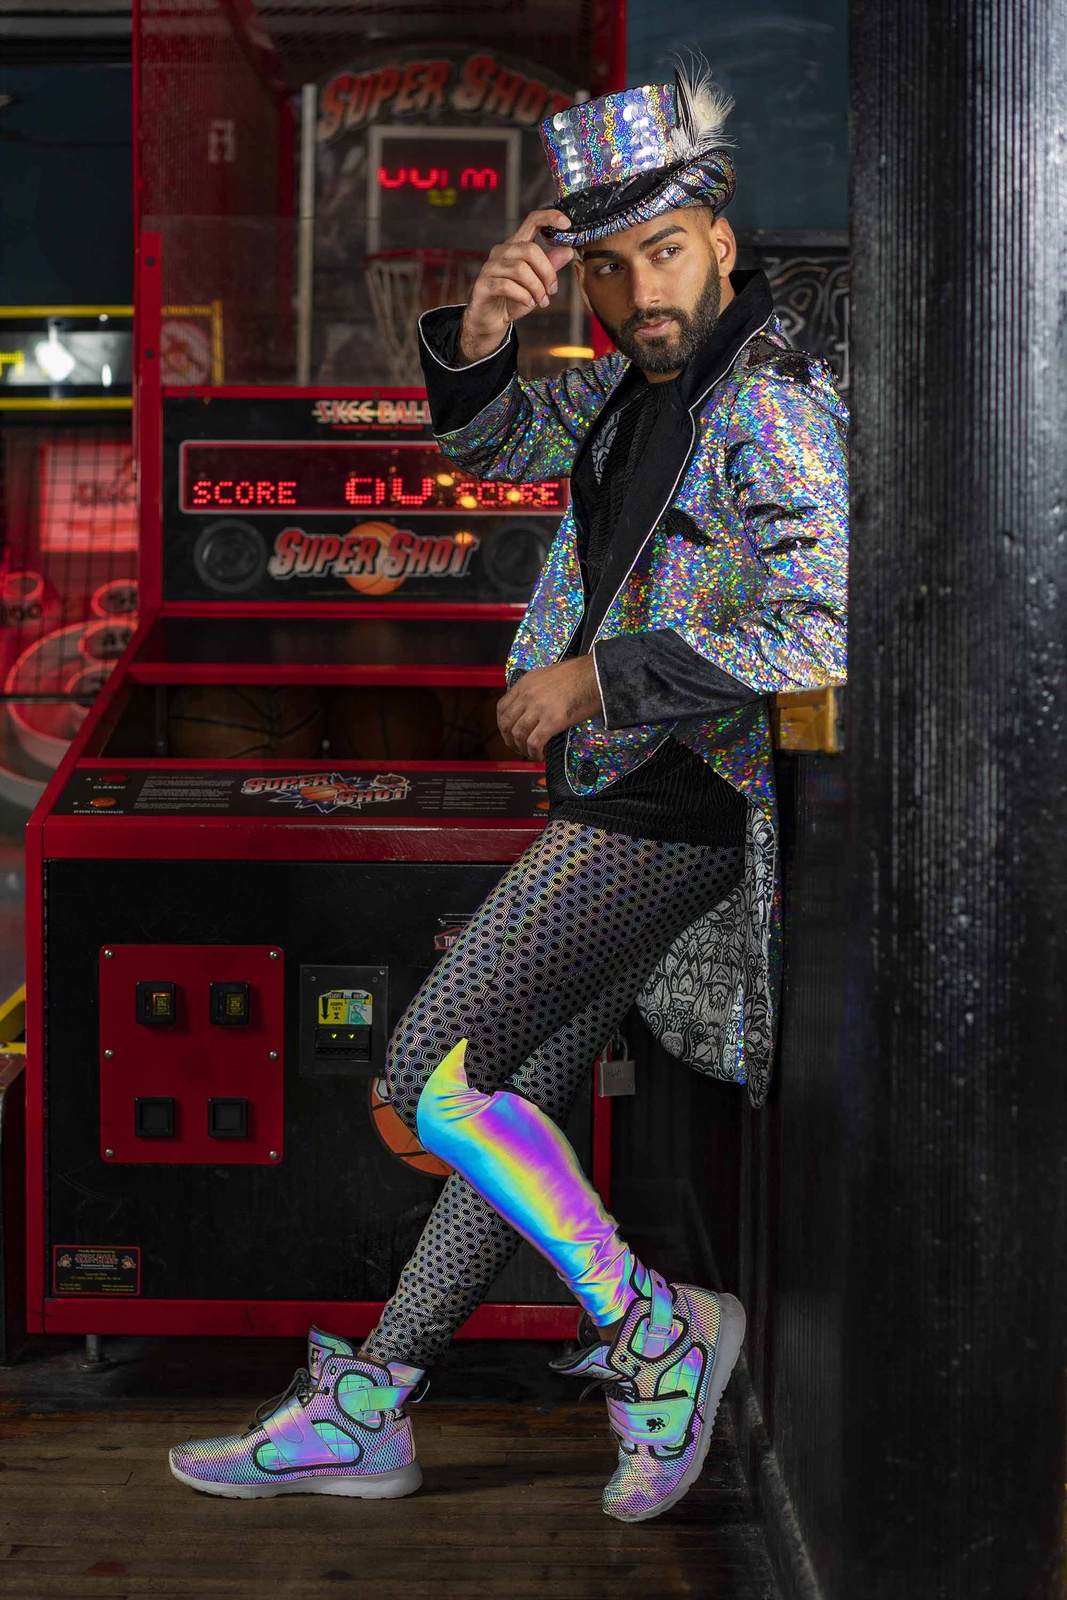 Holographic glitter tuxedo tailcoat jacket from Love Khaos mens festival clothing brand.